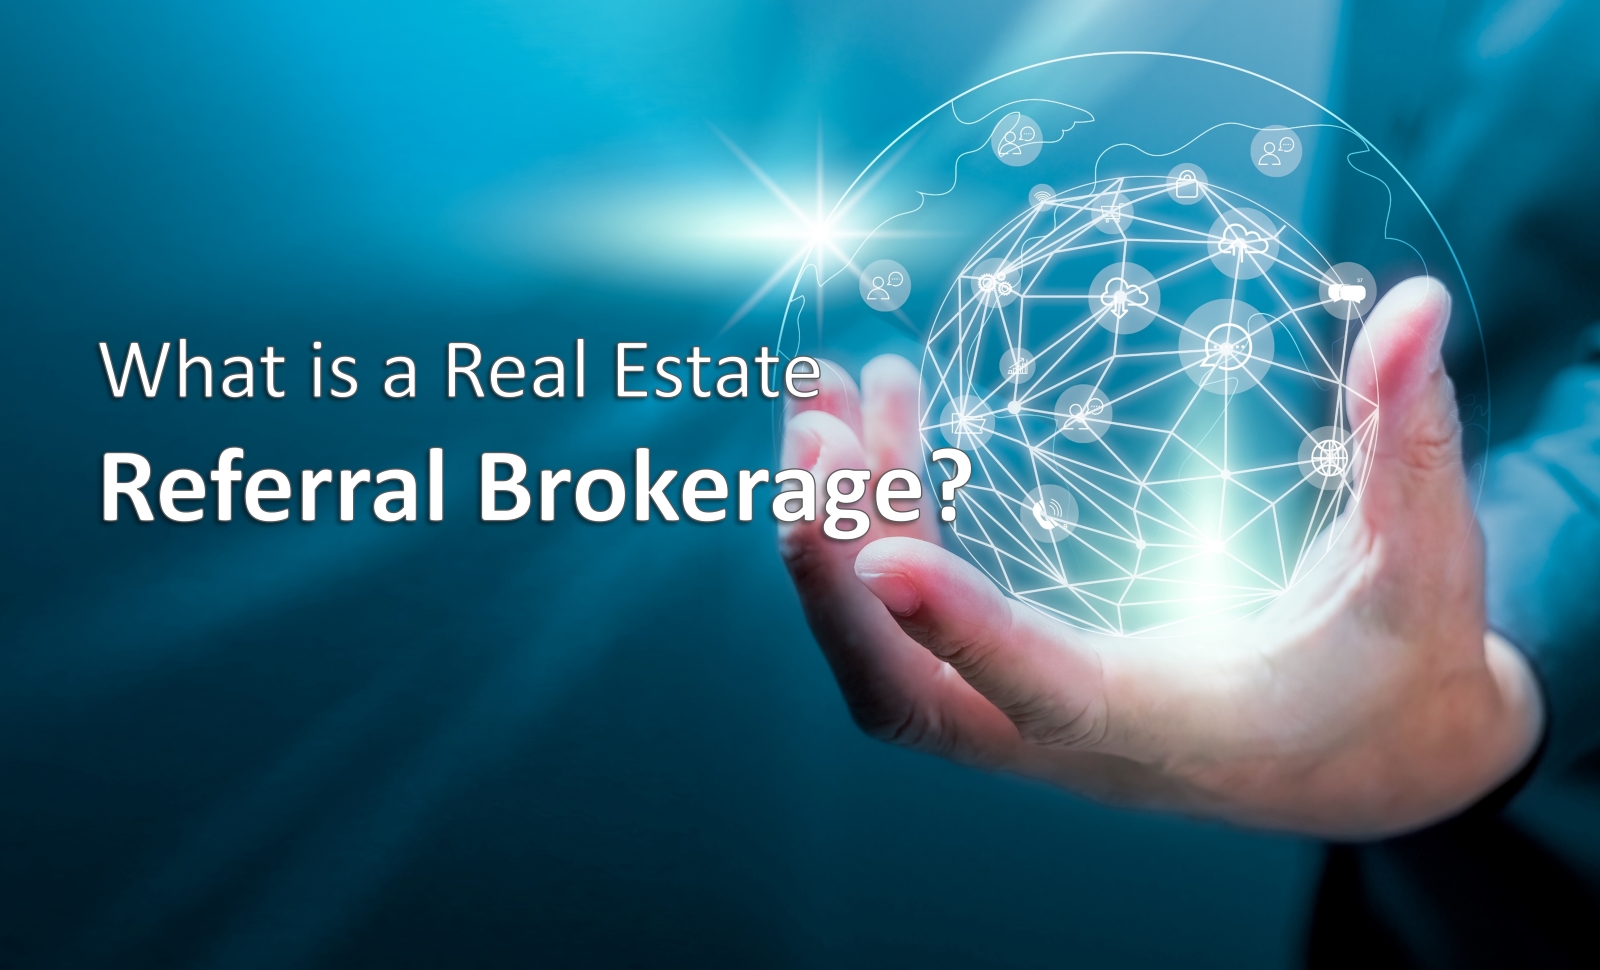 real estate referral brokerage florida your home plus